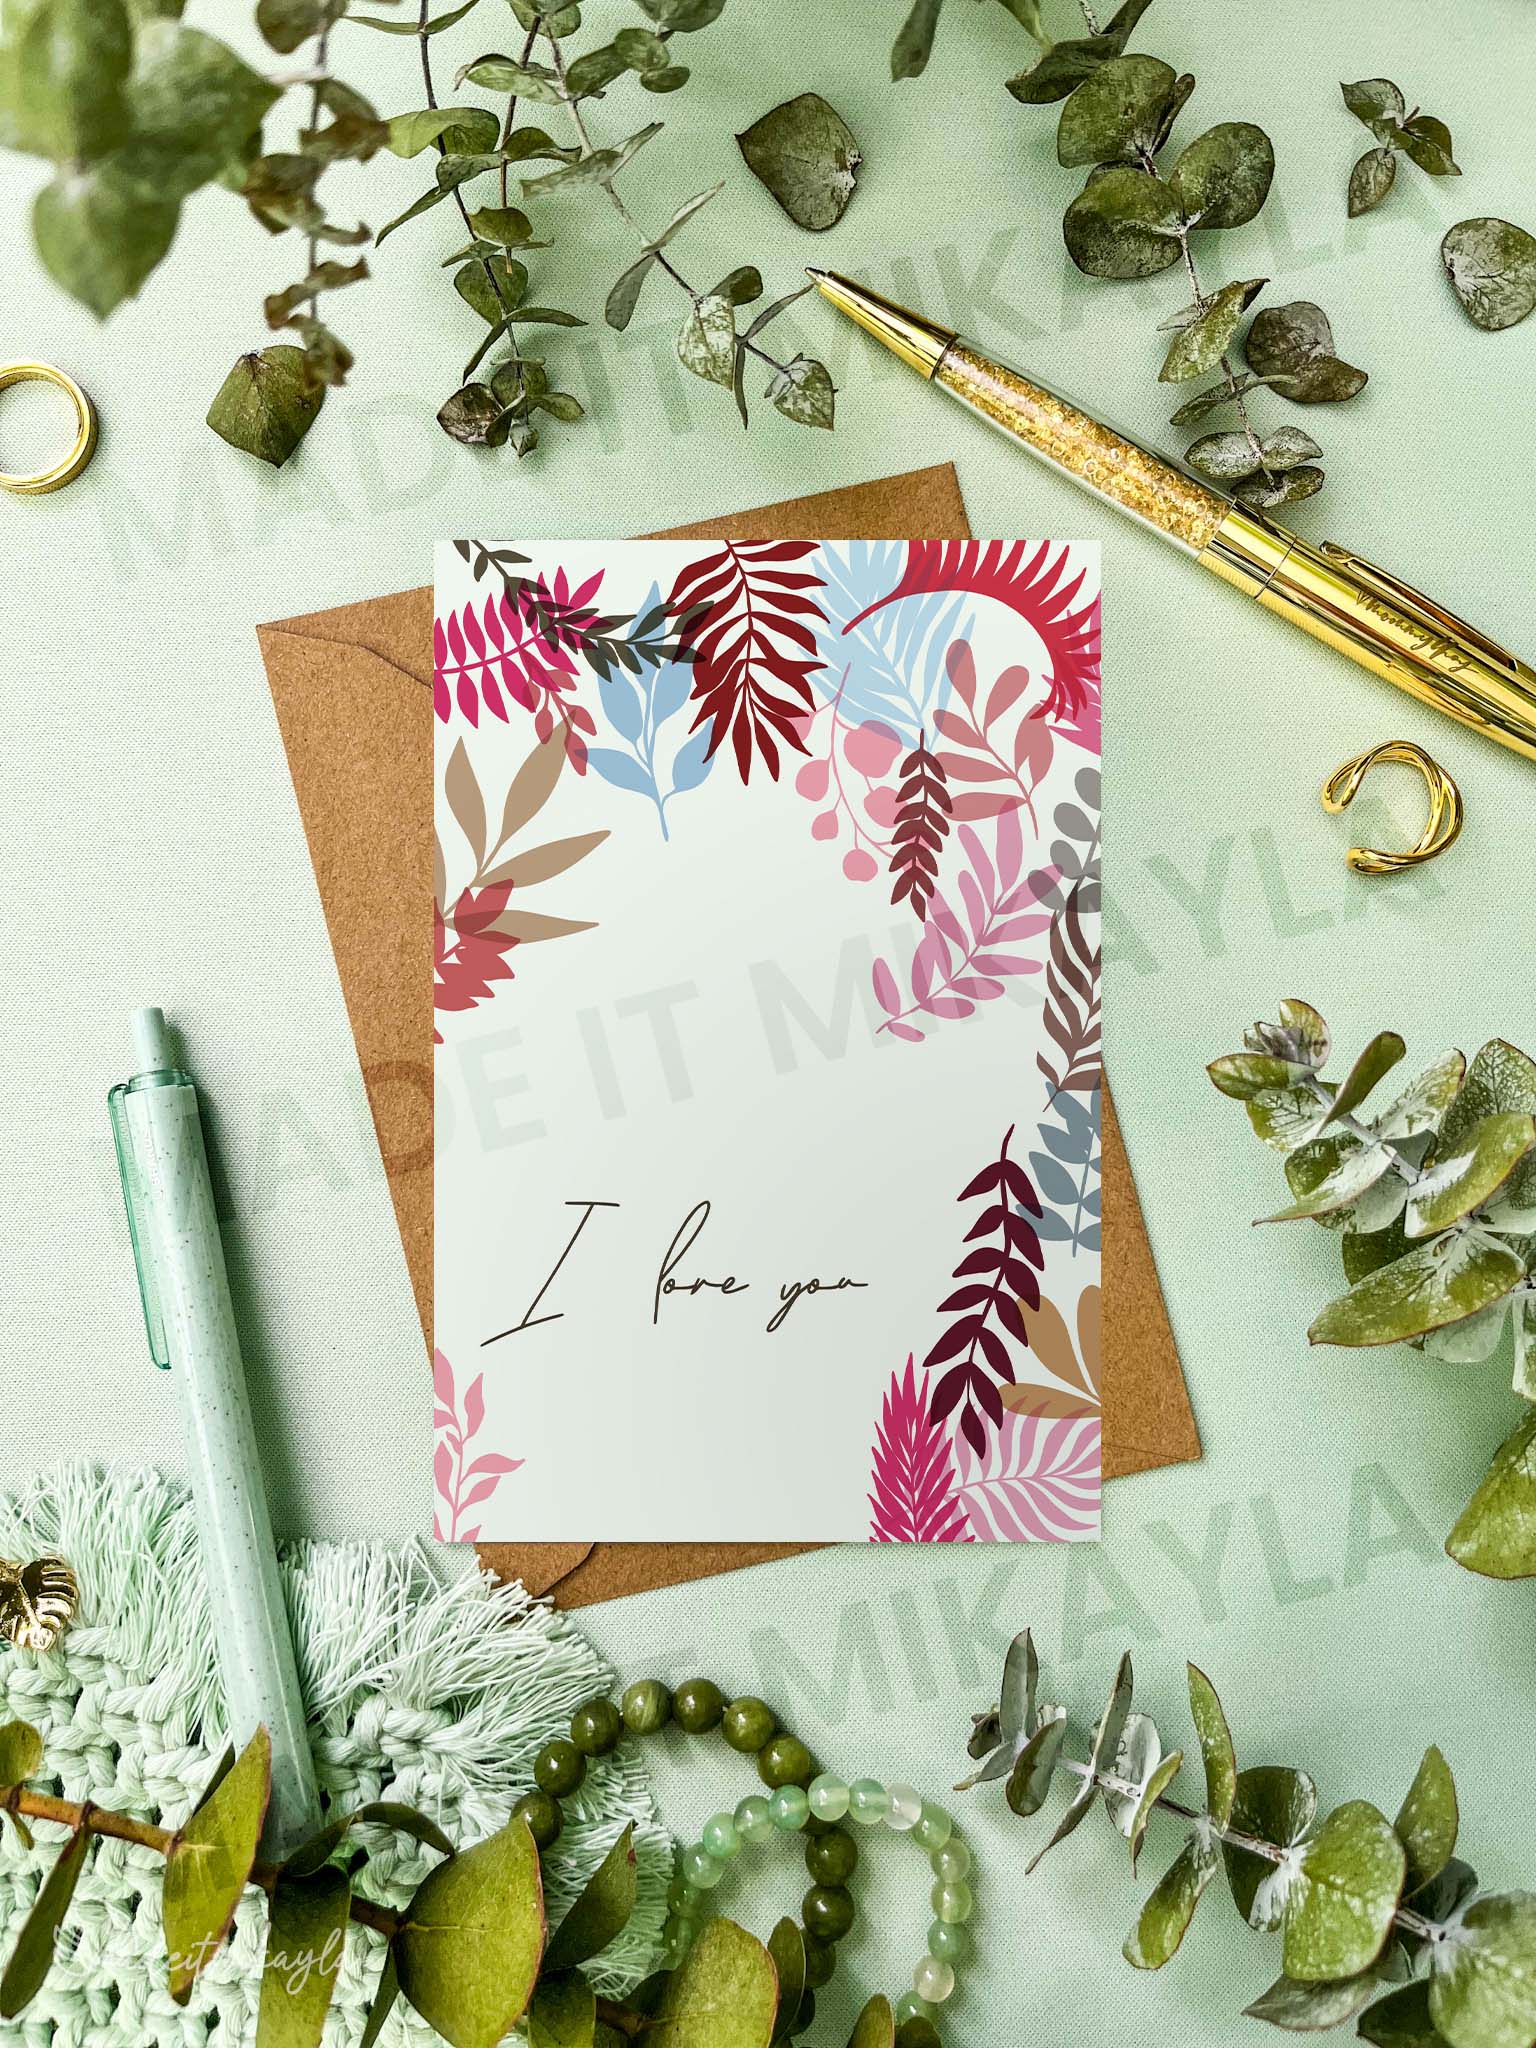 I Love You Greeting Card | MadeItMikayla